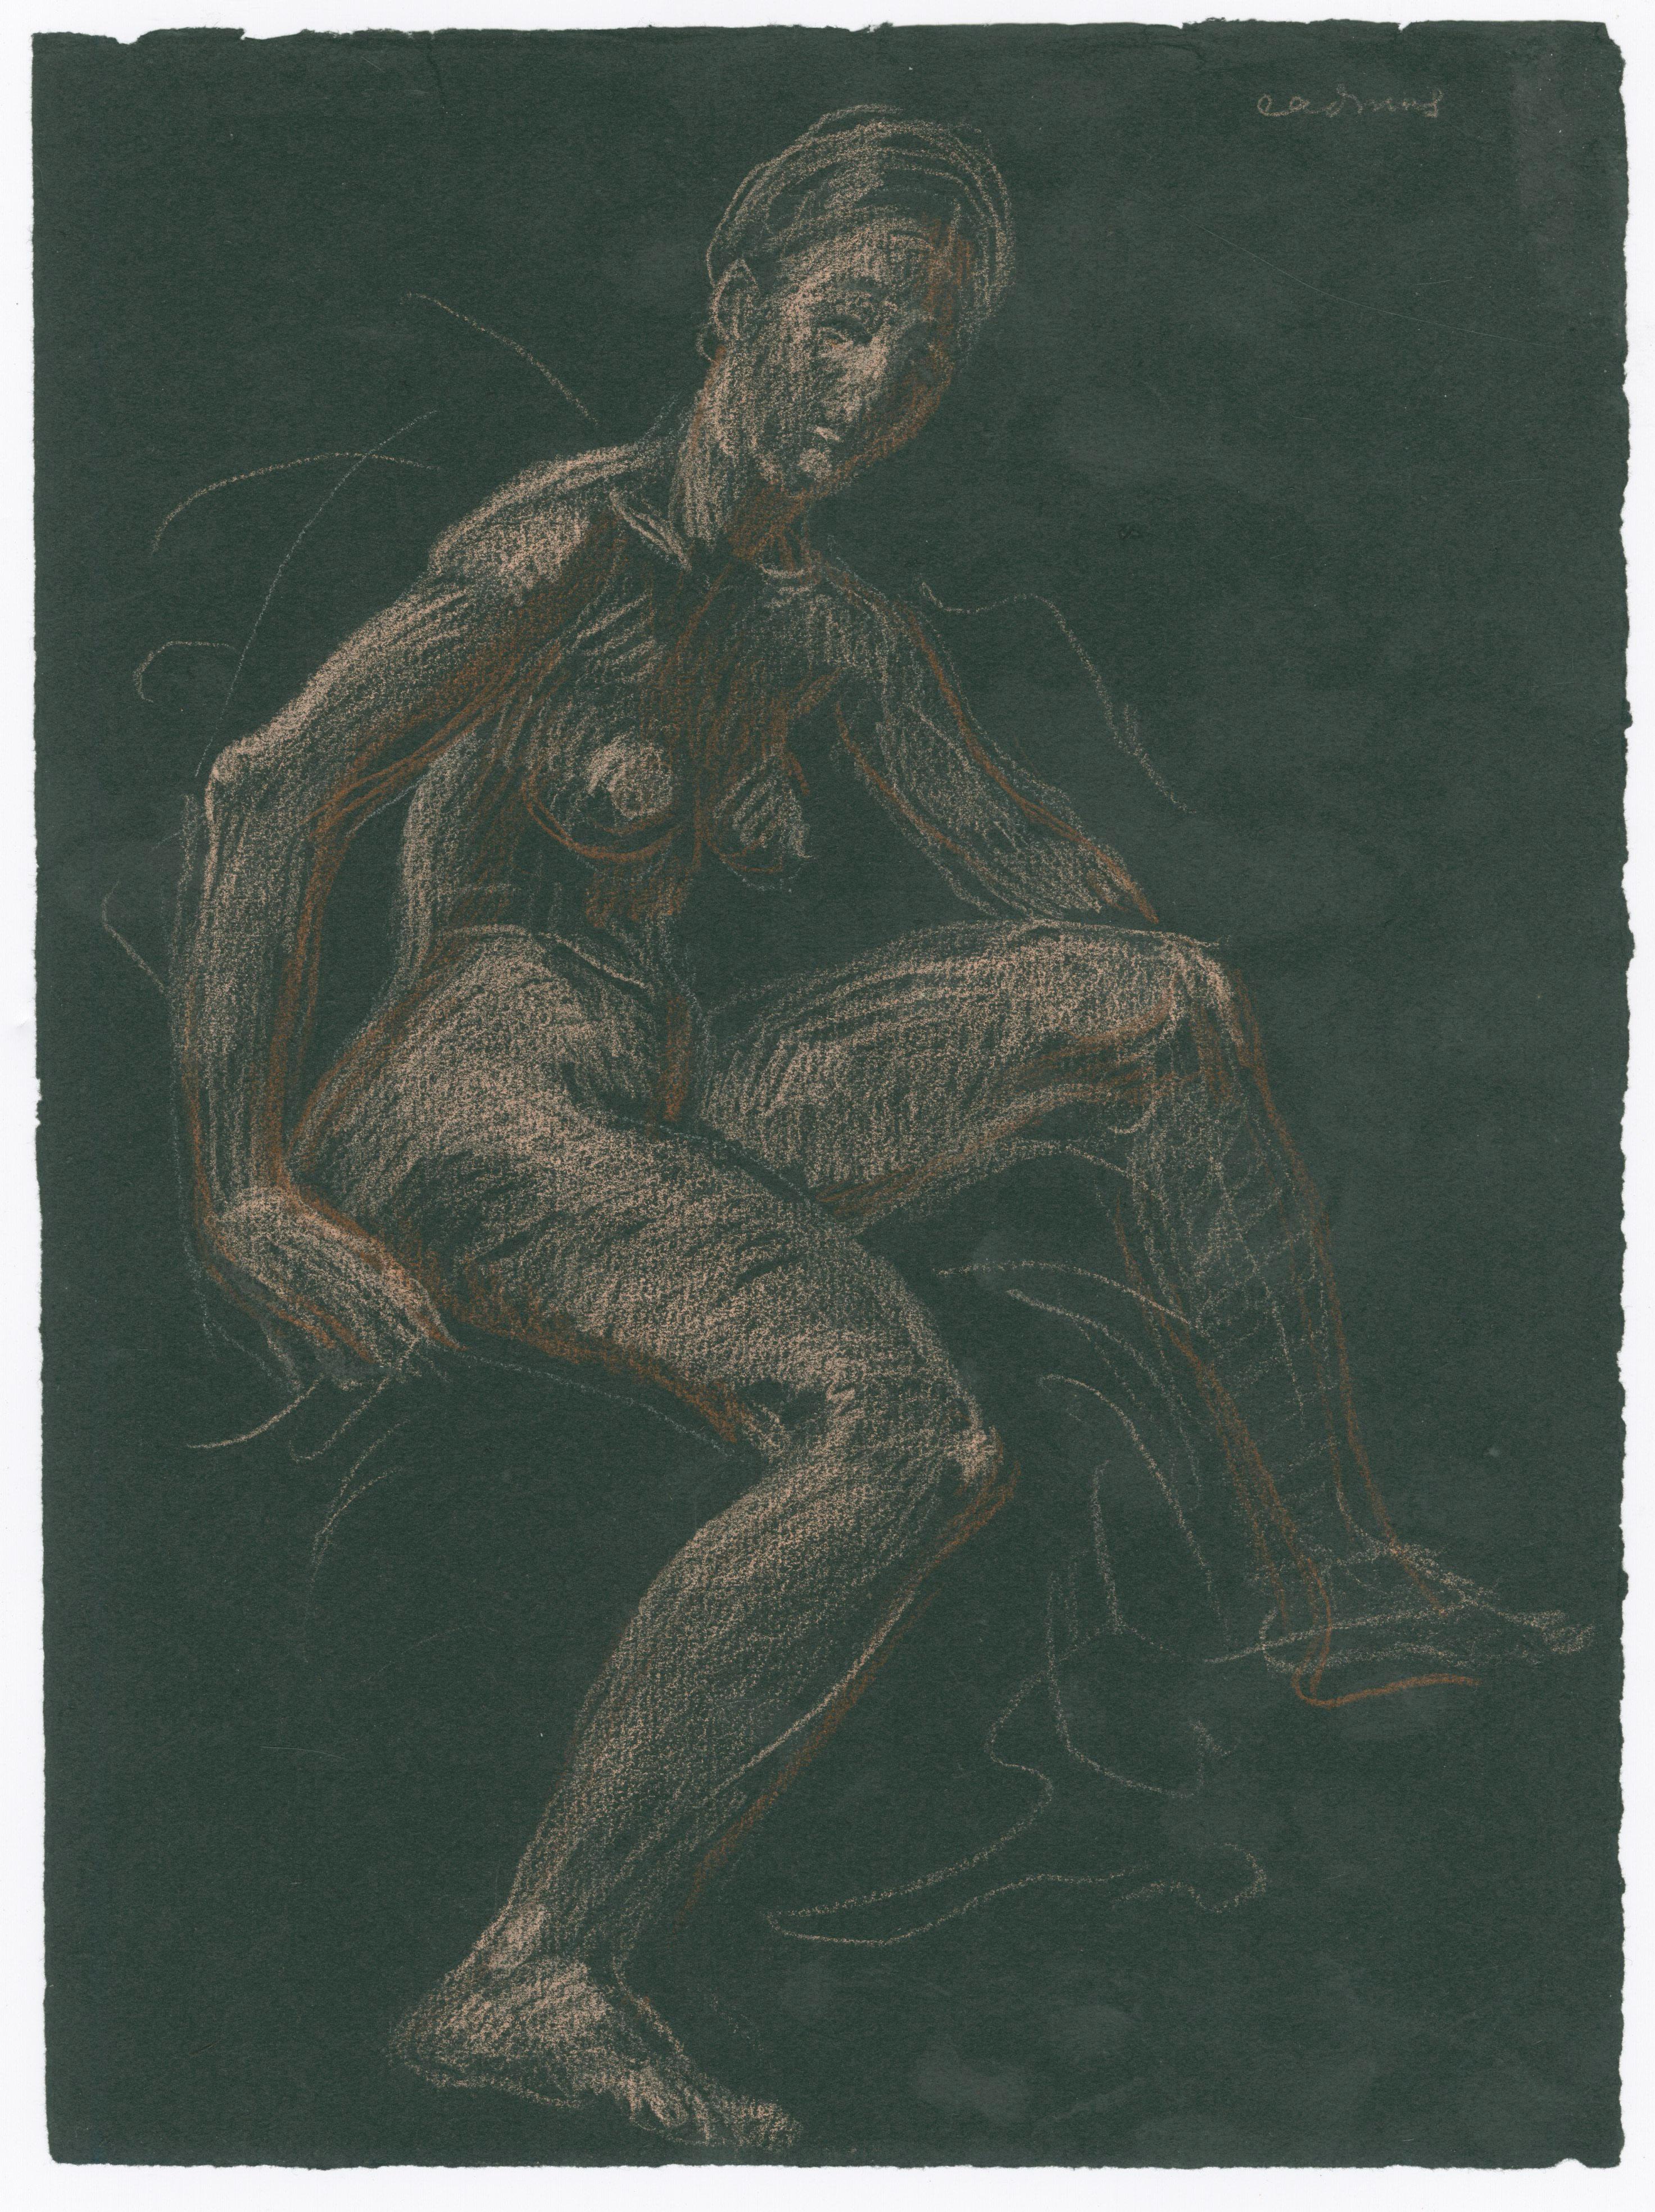 Seated Female Nude - Art by Paul Cadmus